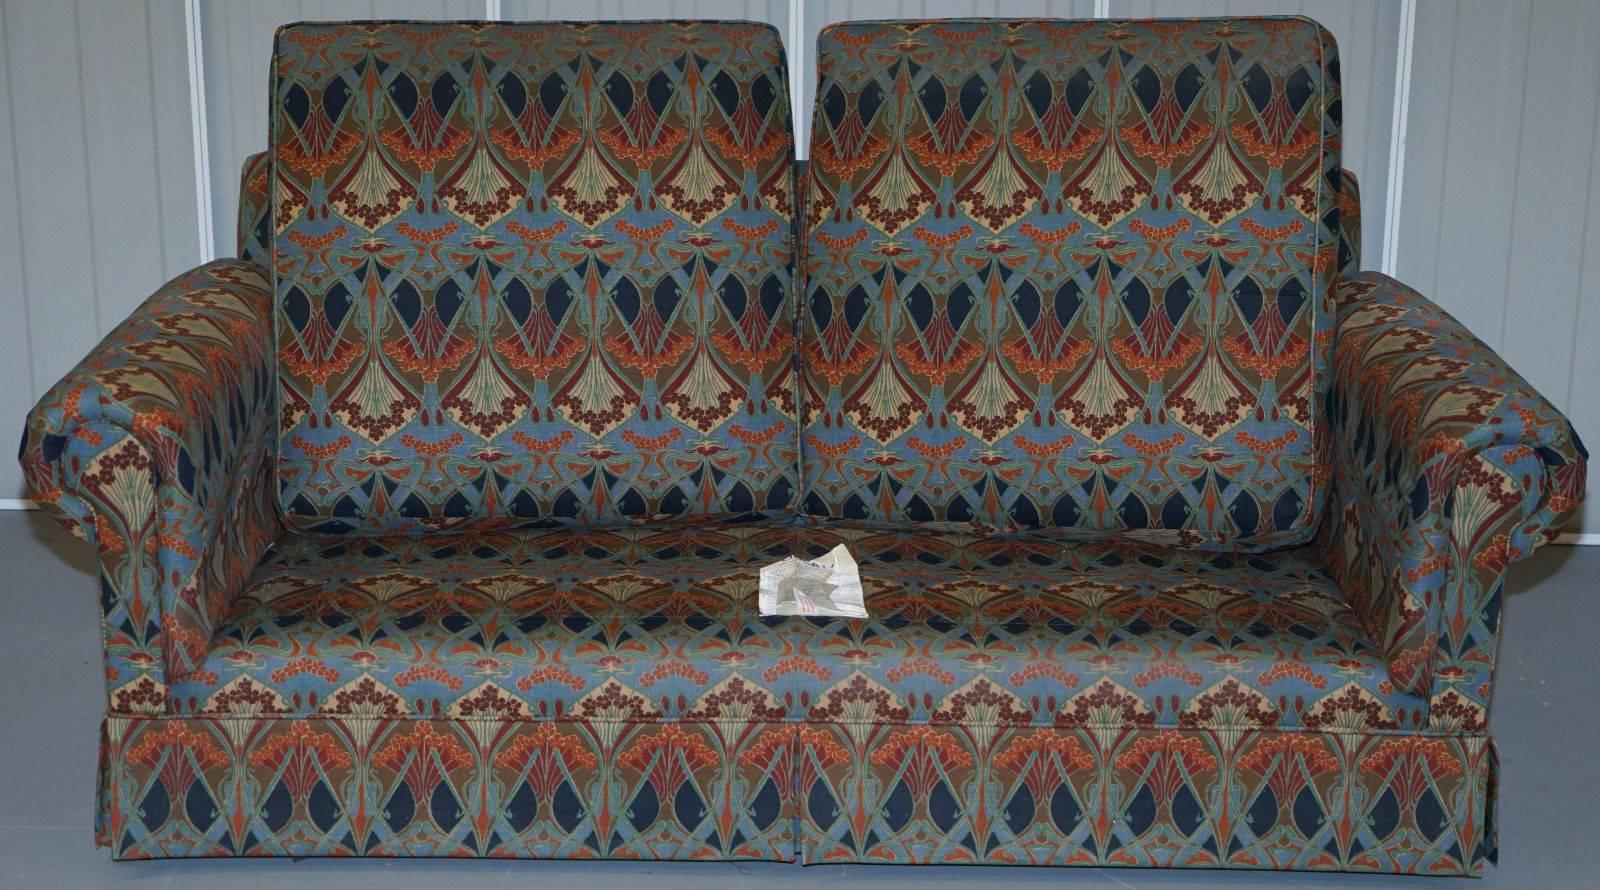 Great Britain (UK) Stunning Liberty London Classic English Sofa Ianthe Linen Union Fabric Rare Find